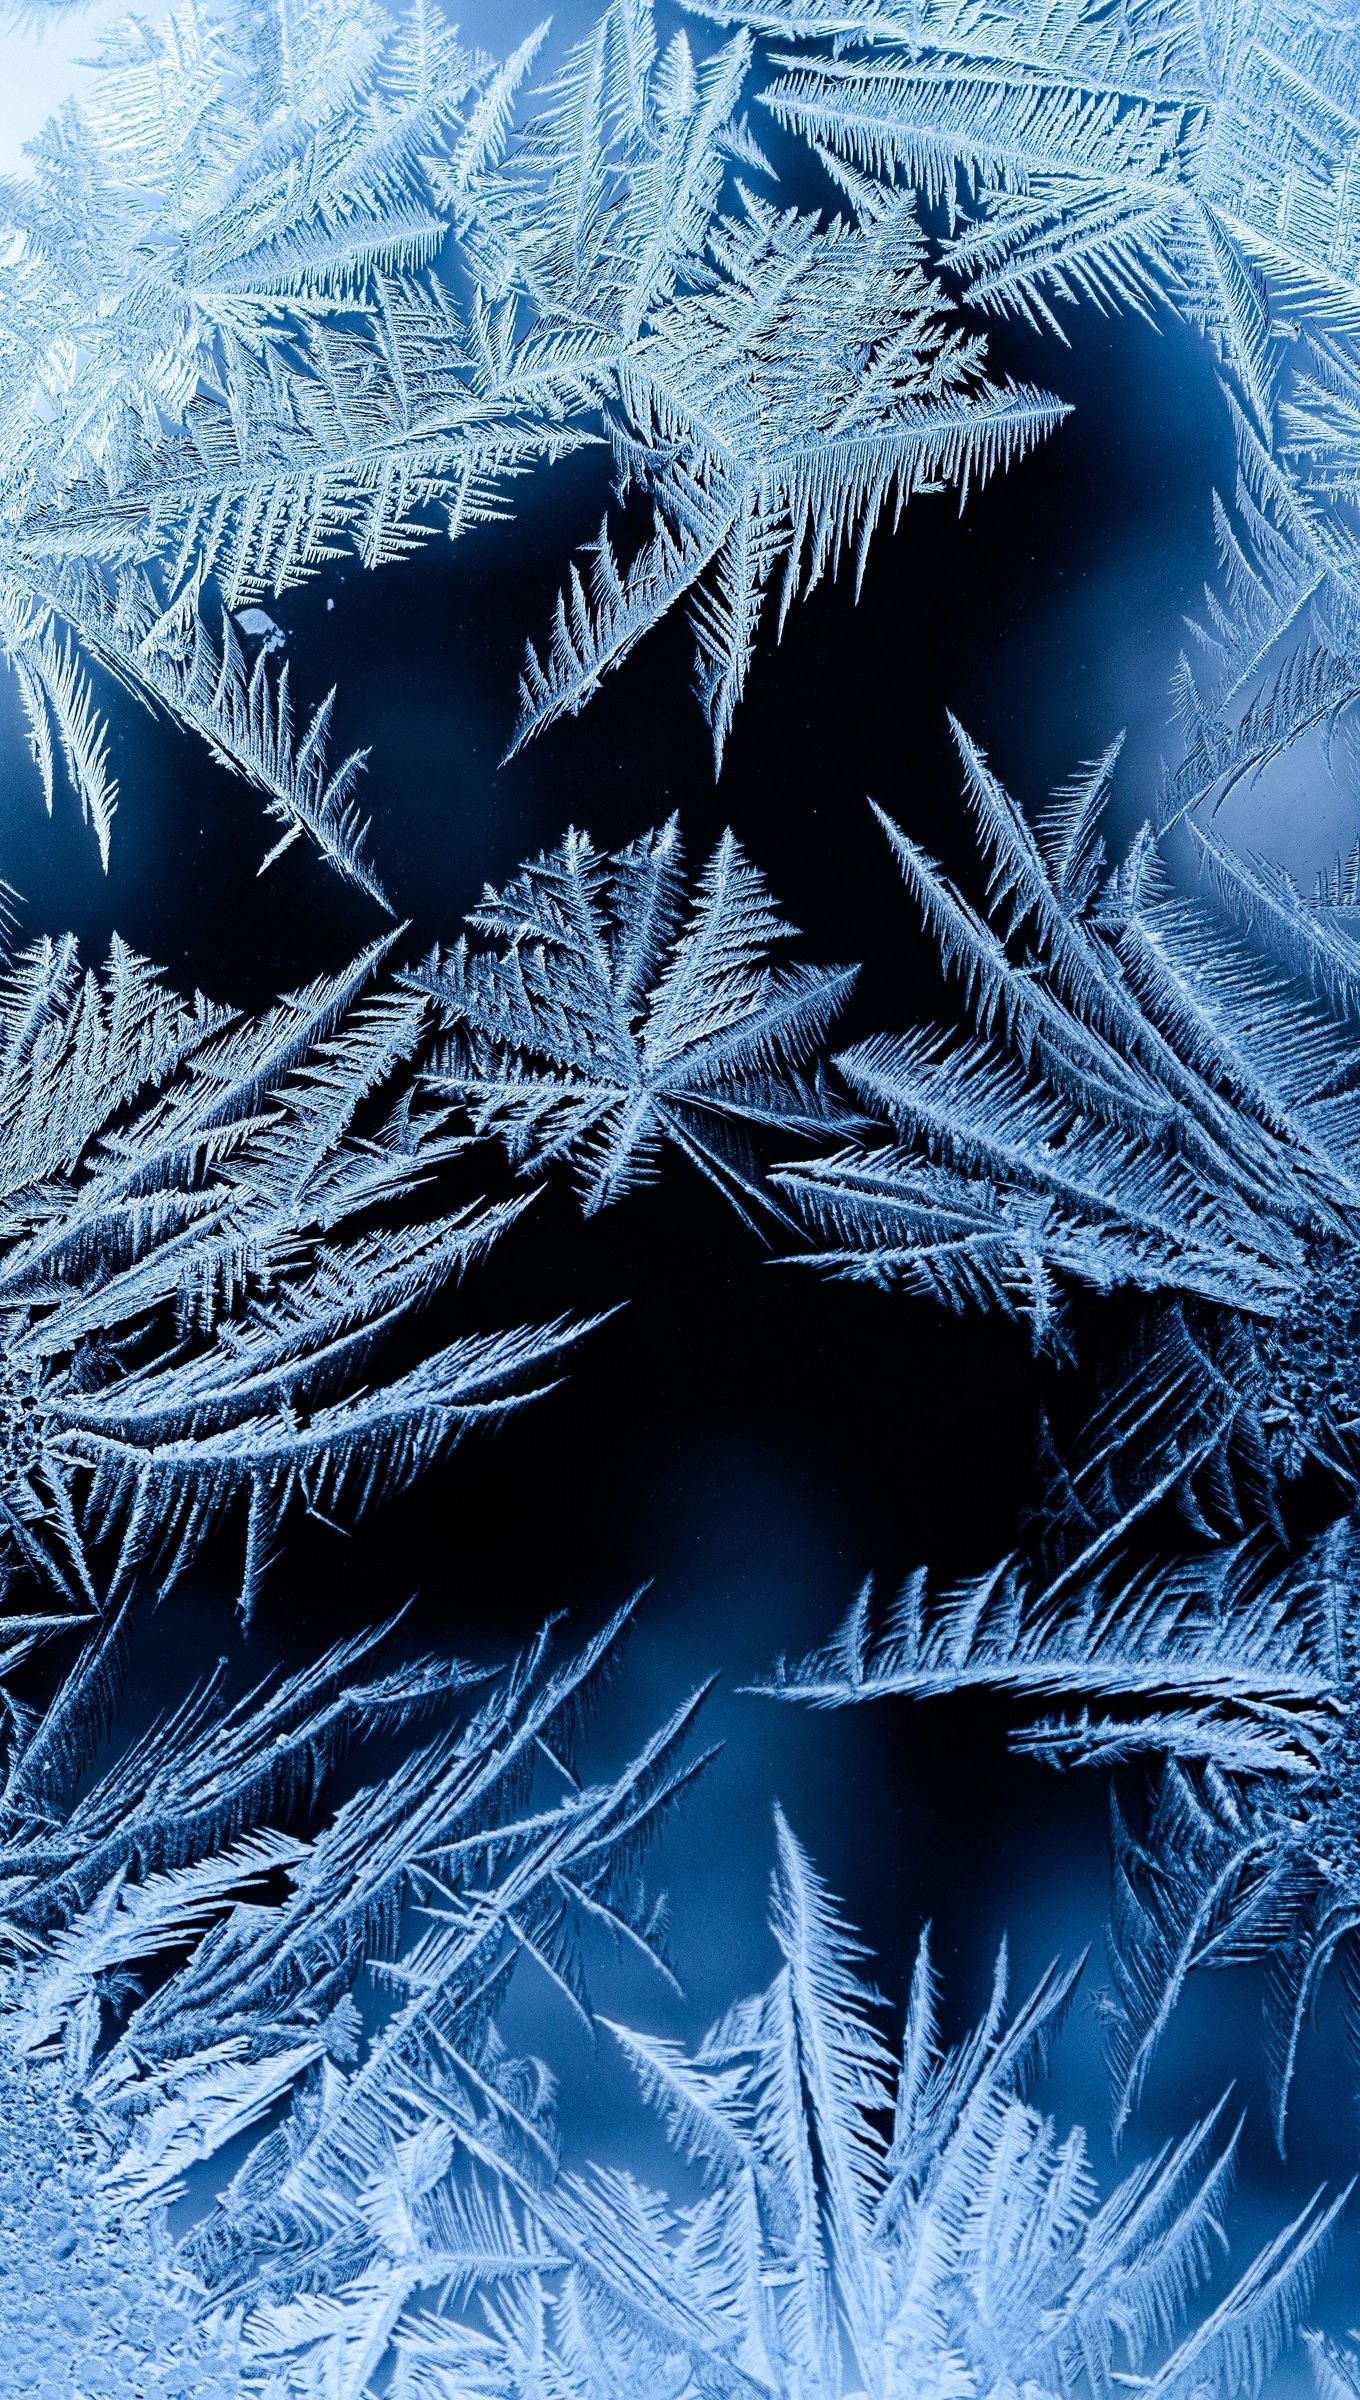 Pattern of snowflakes Wallpaper 4k Ultra HD ID:3837